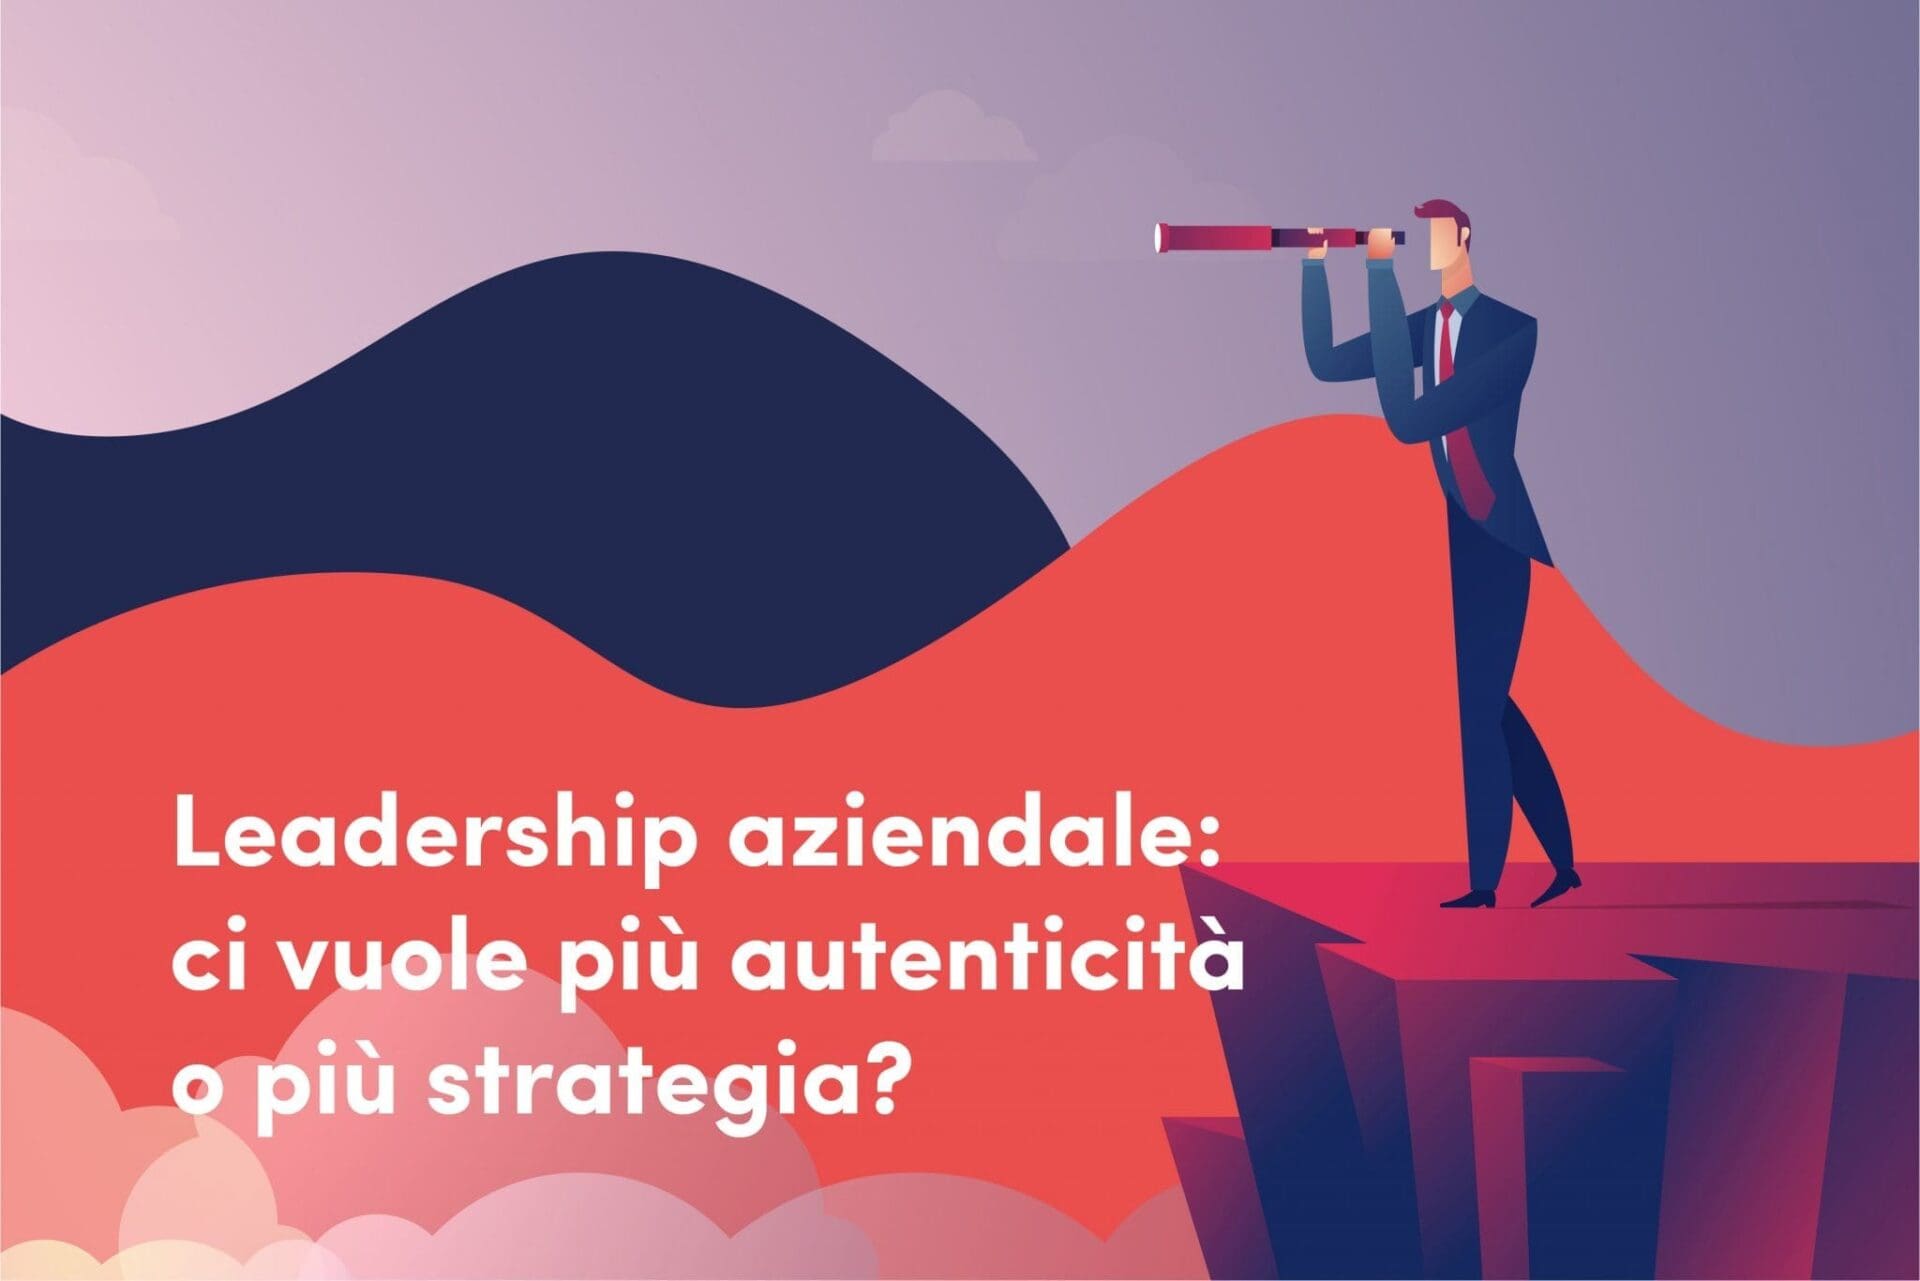 Leadership aziendale - Strategia